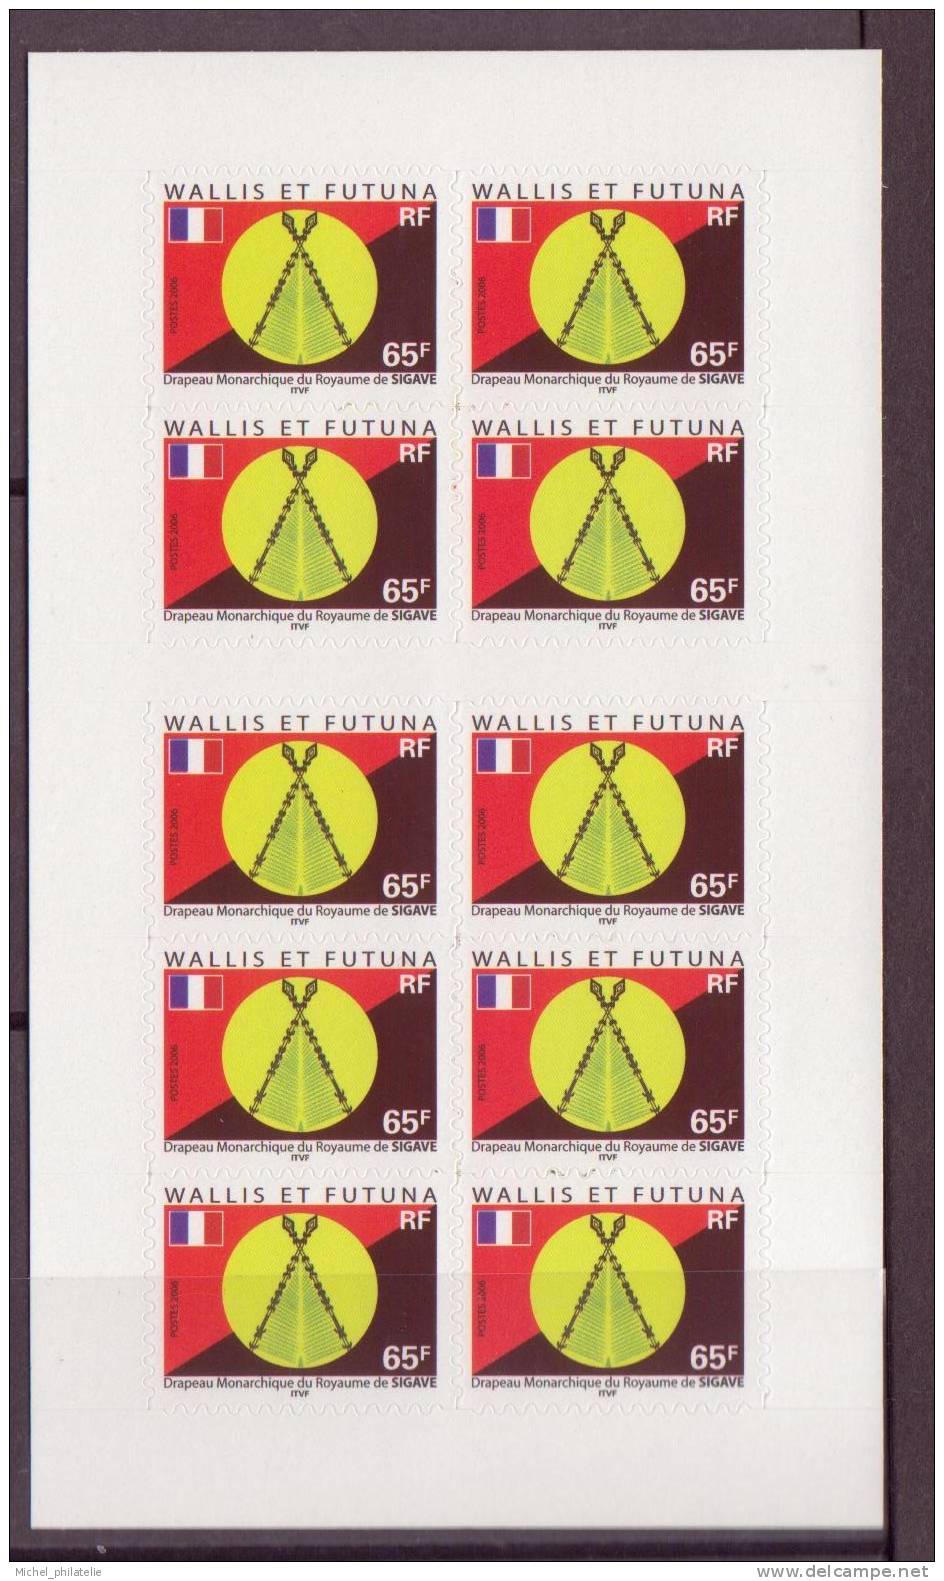 Wallis Et Futuna N° 654 Carnet ** Neuf Sans Charniere   Drapeau Monarchique Royaume Sigave - Unused Stamps